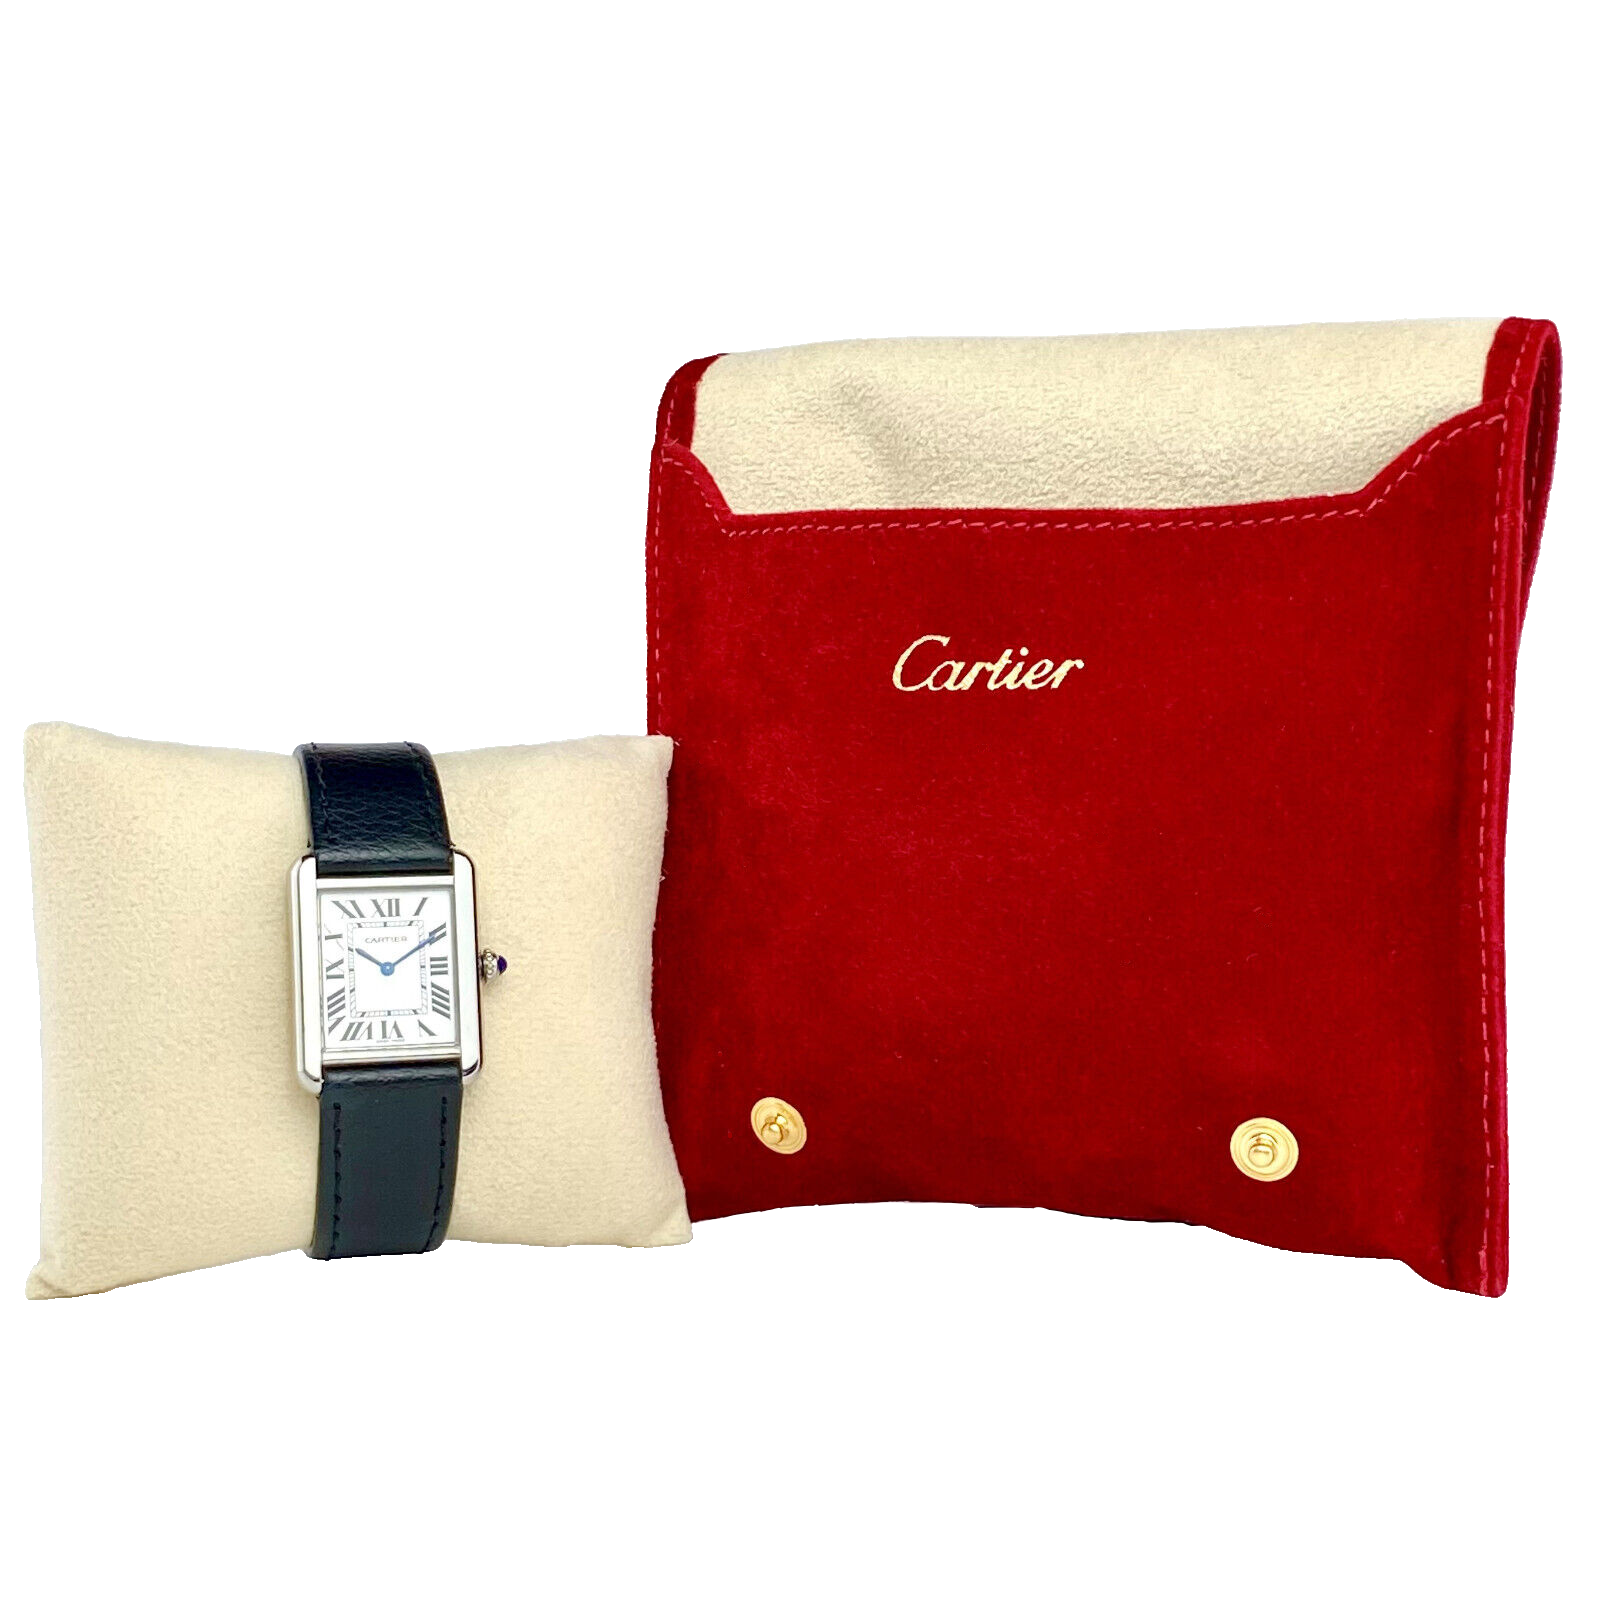 Cartier Travel Pouch Service Etui Reiseetui Reisebox Uhrenetui Stoff Rot red Watch case